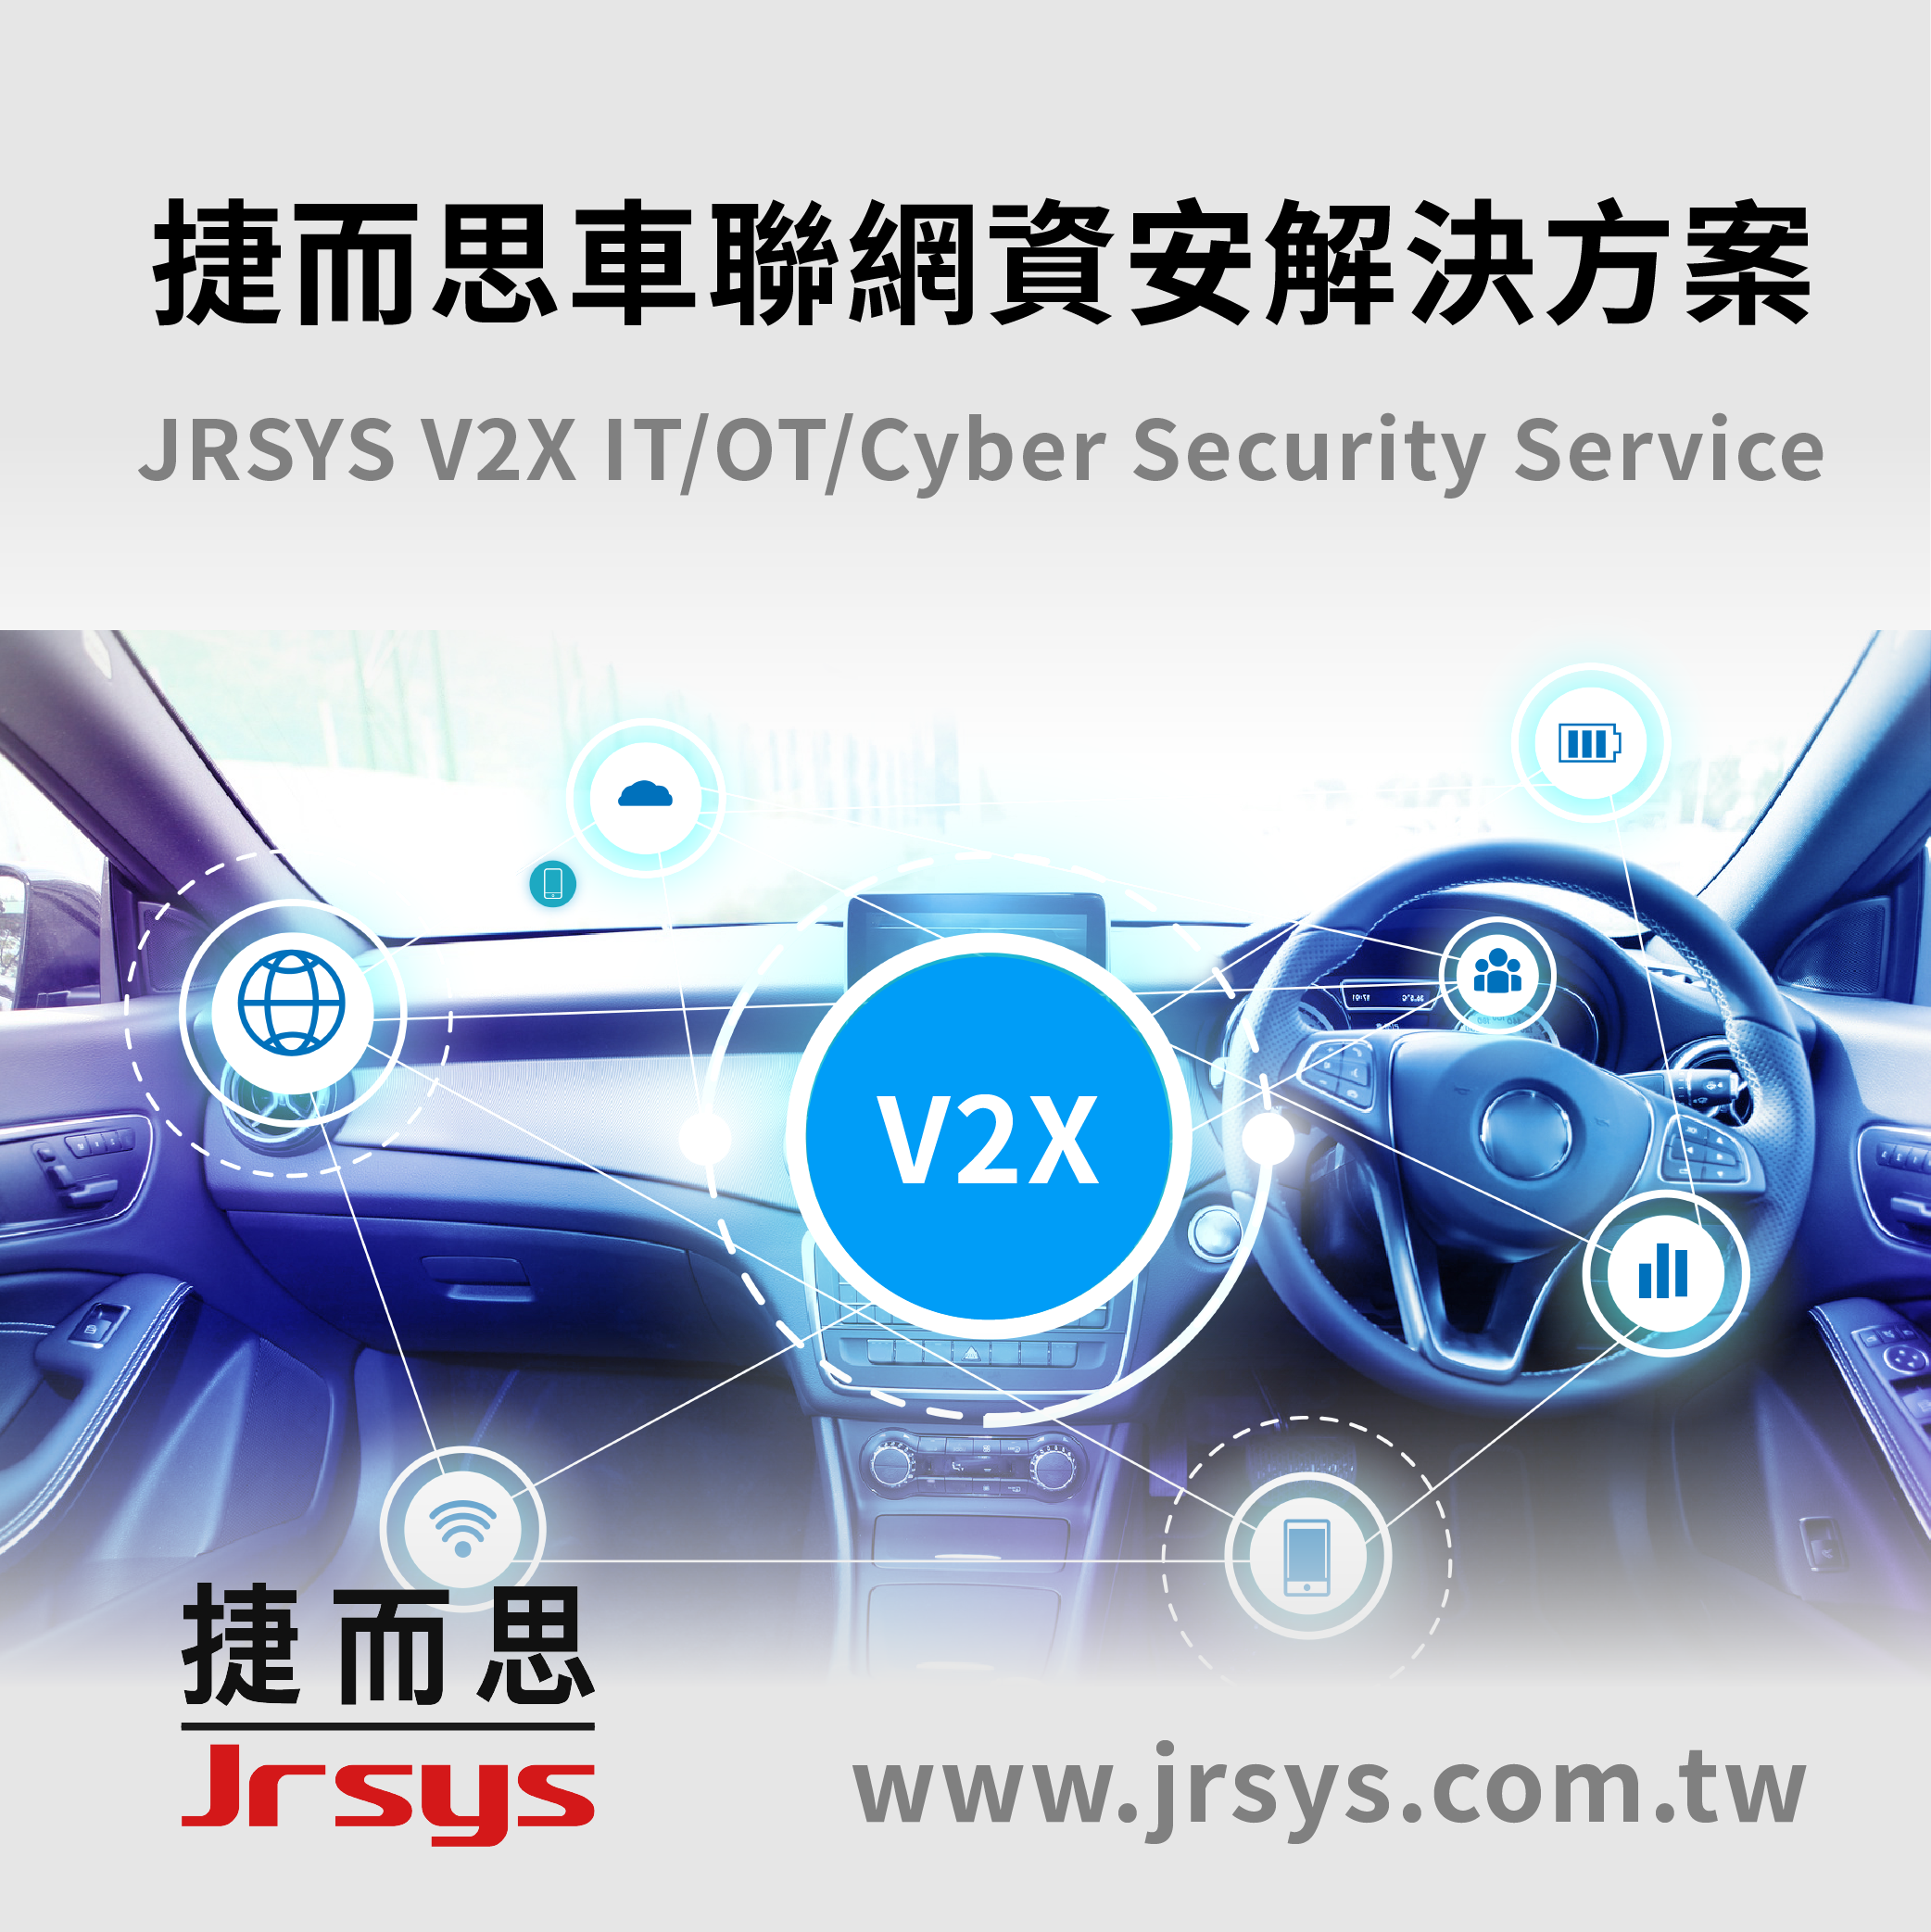 JRSYS V2X IT/OT/Cyber Security Service